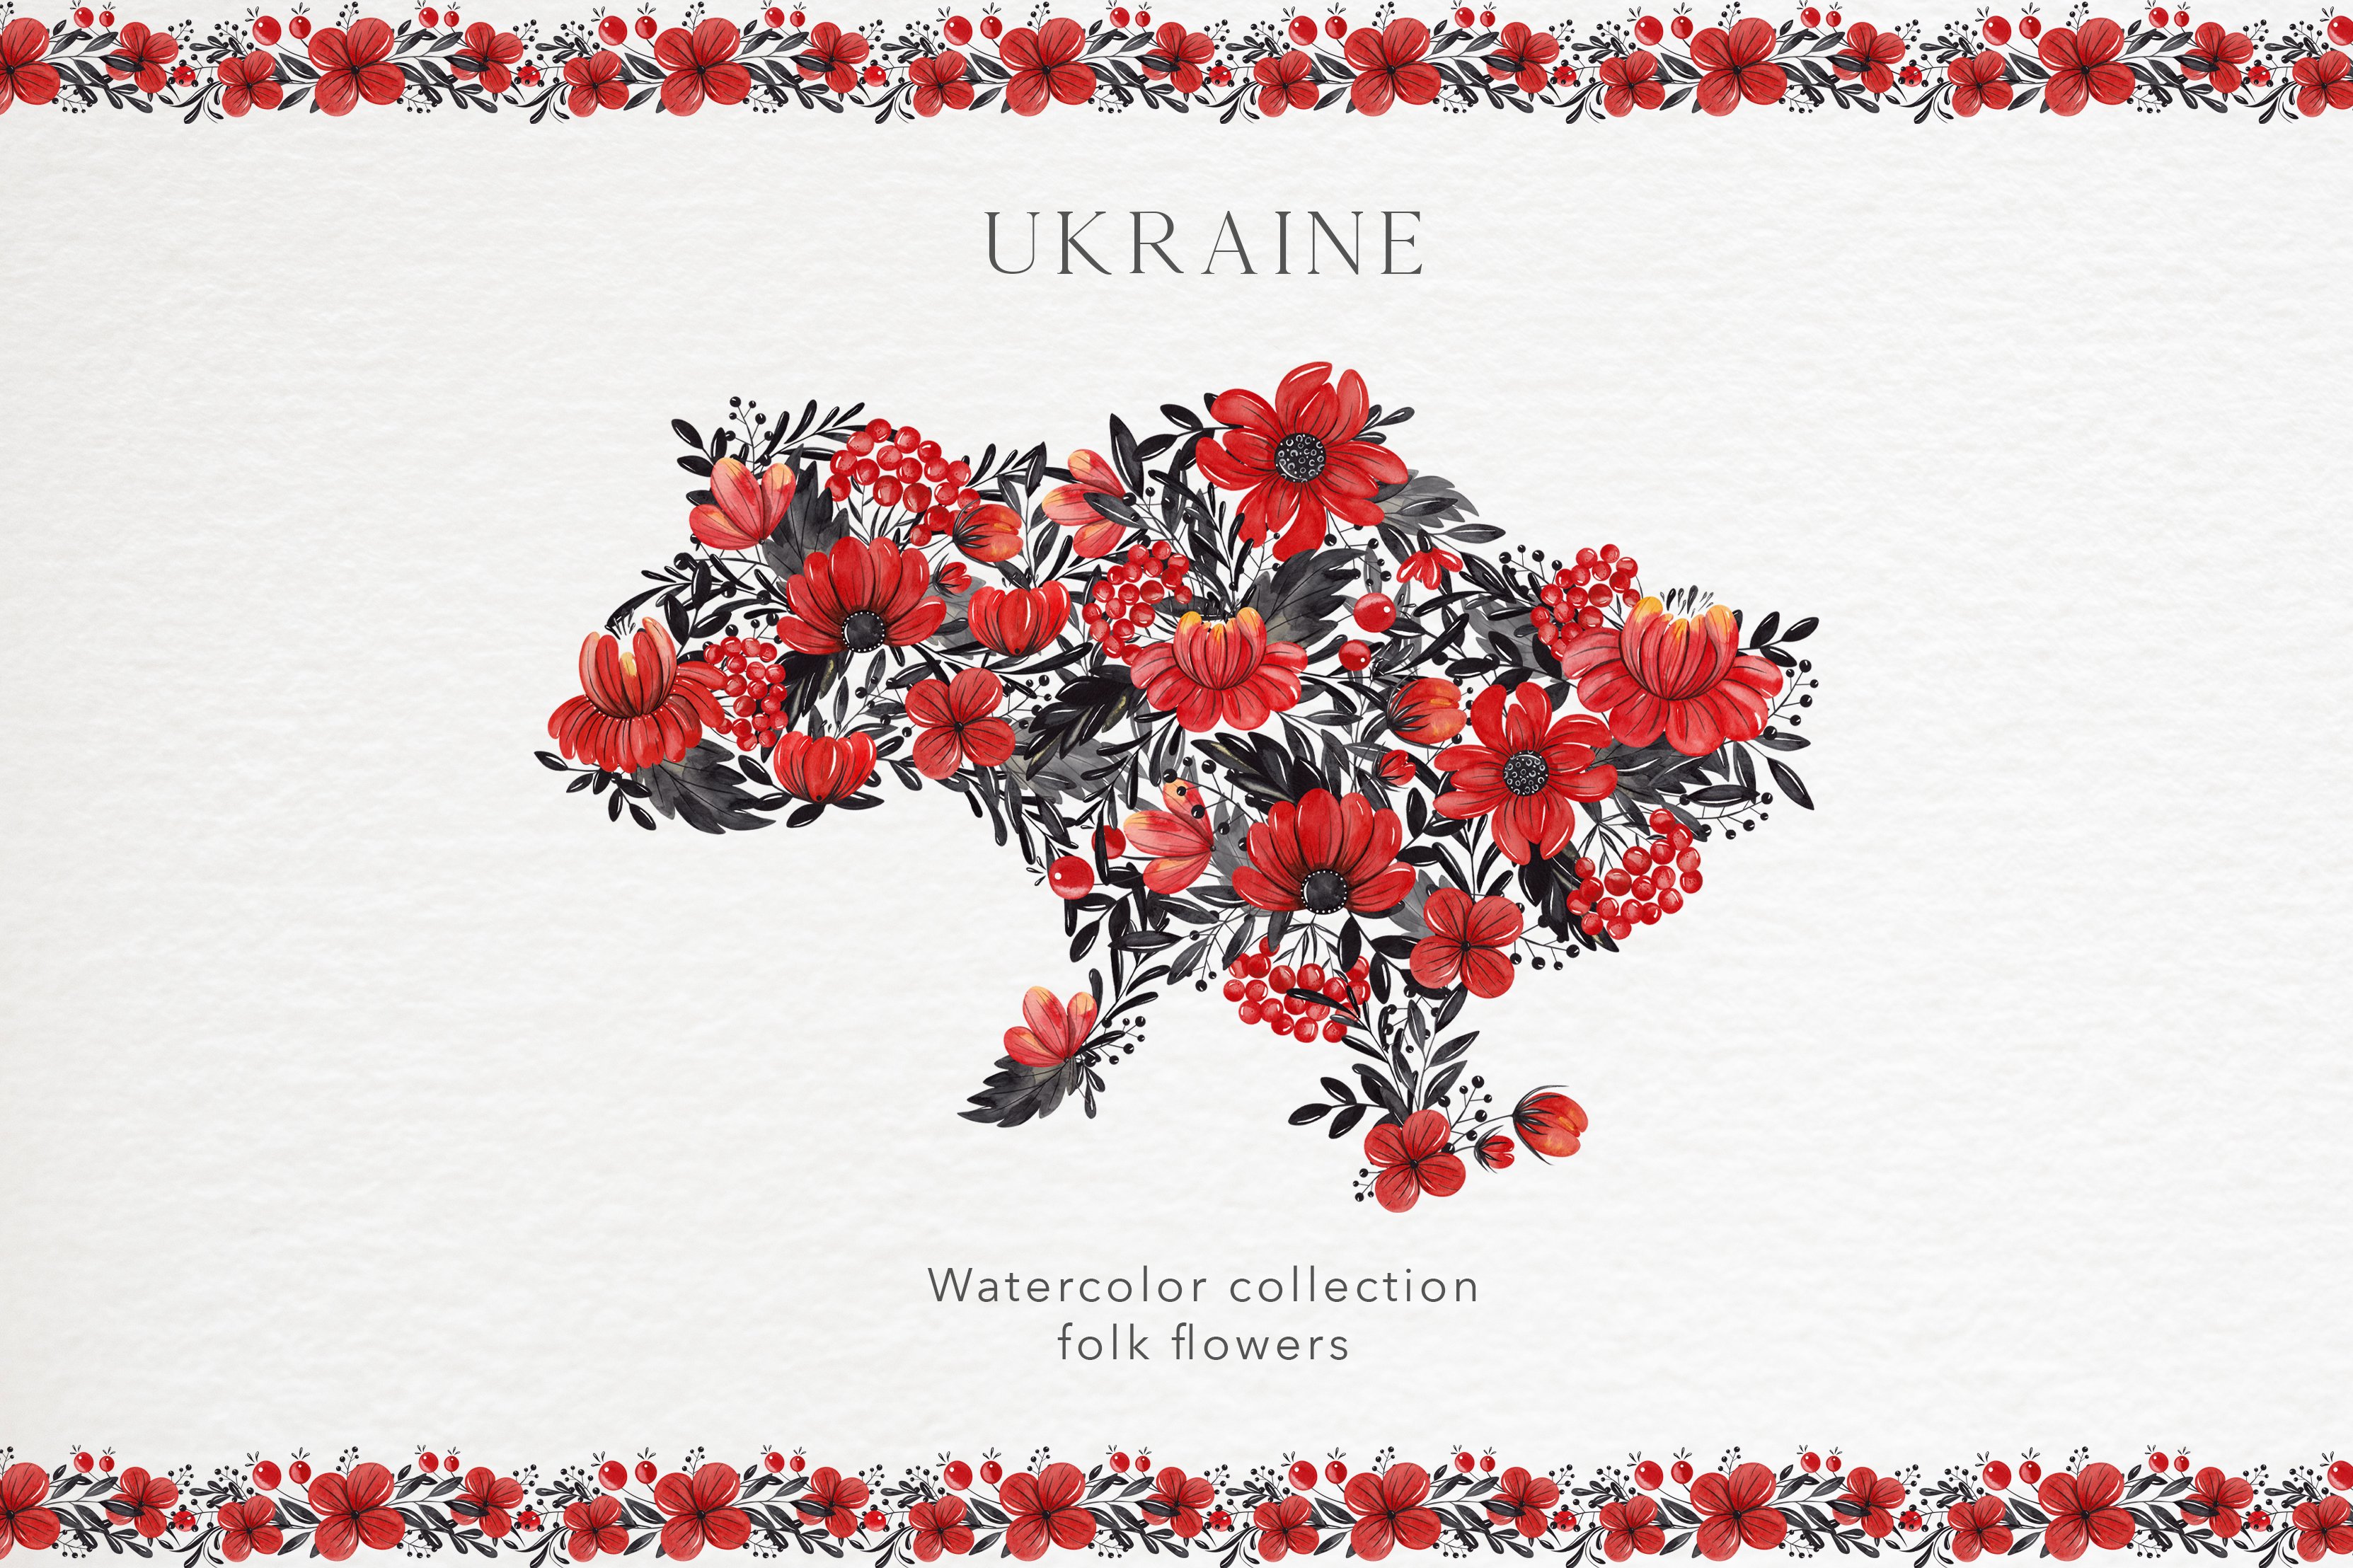 Ukrainian Folk. Watercolor flowers cover image.